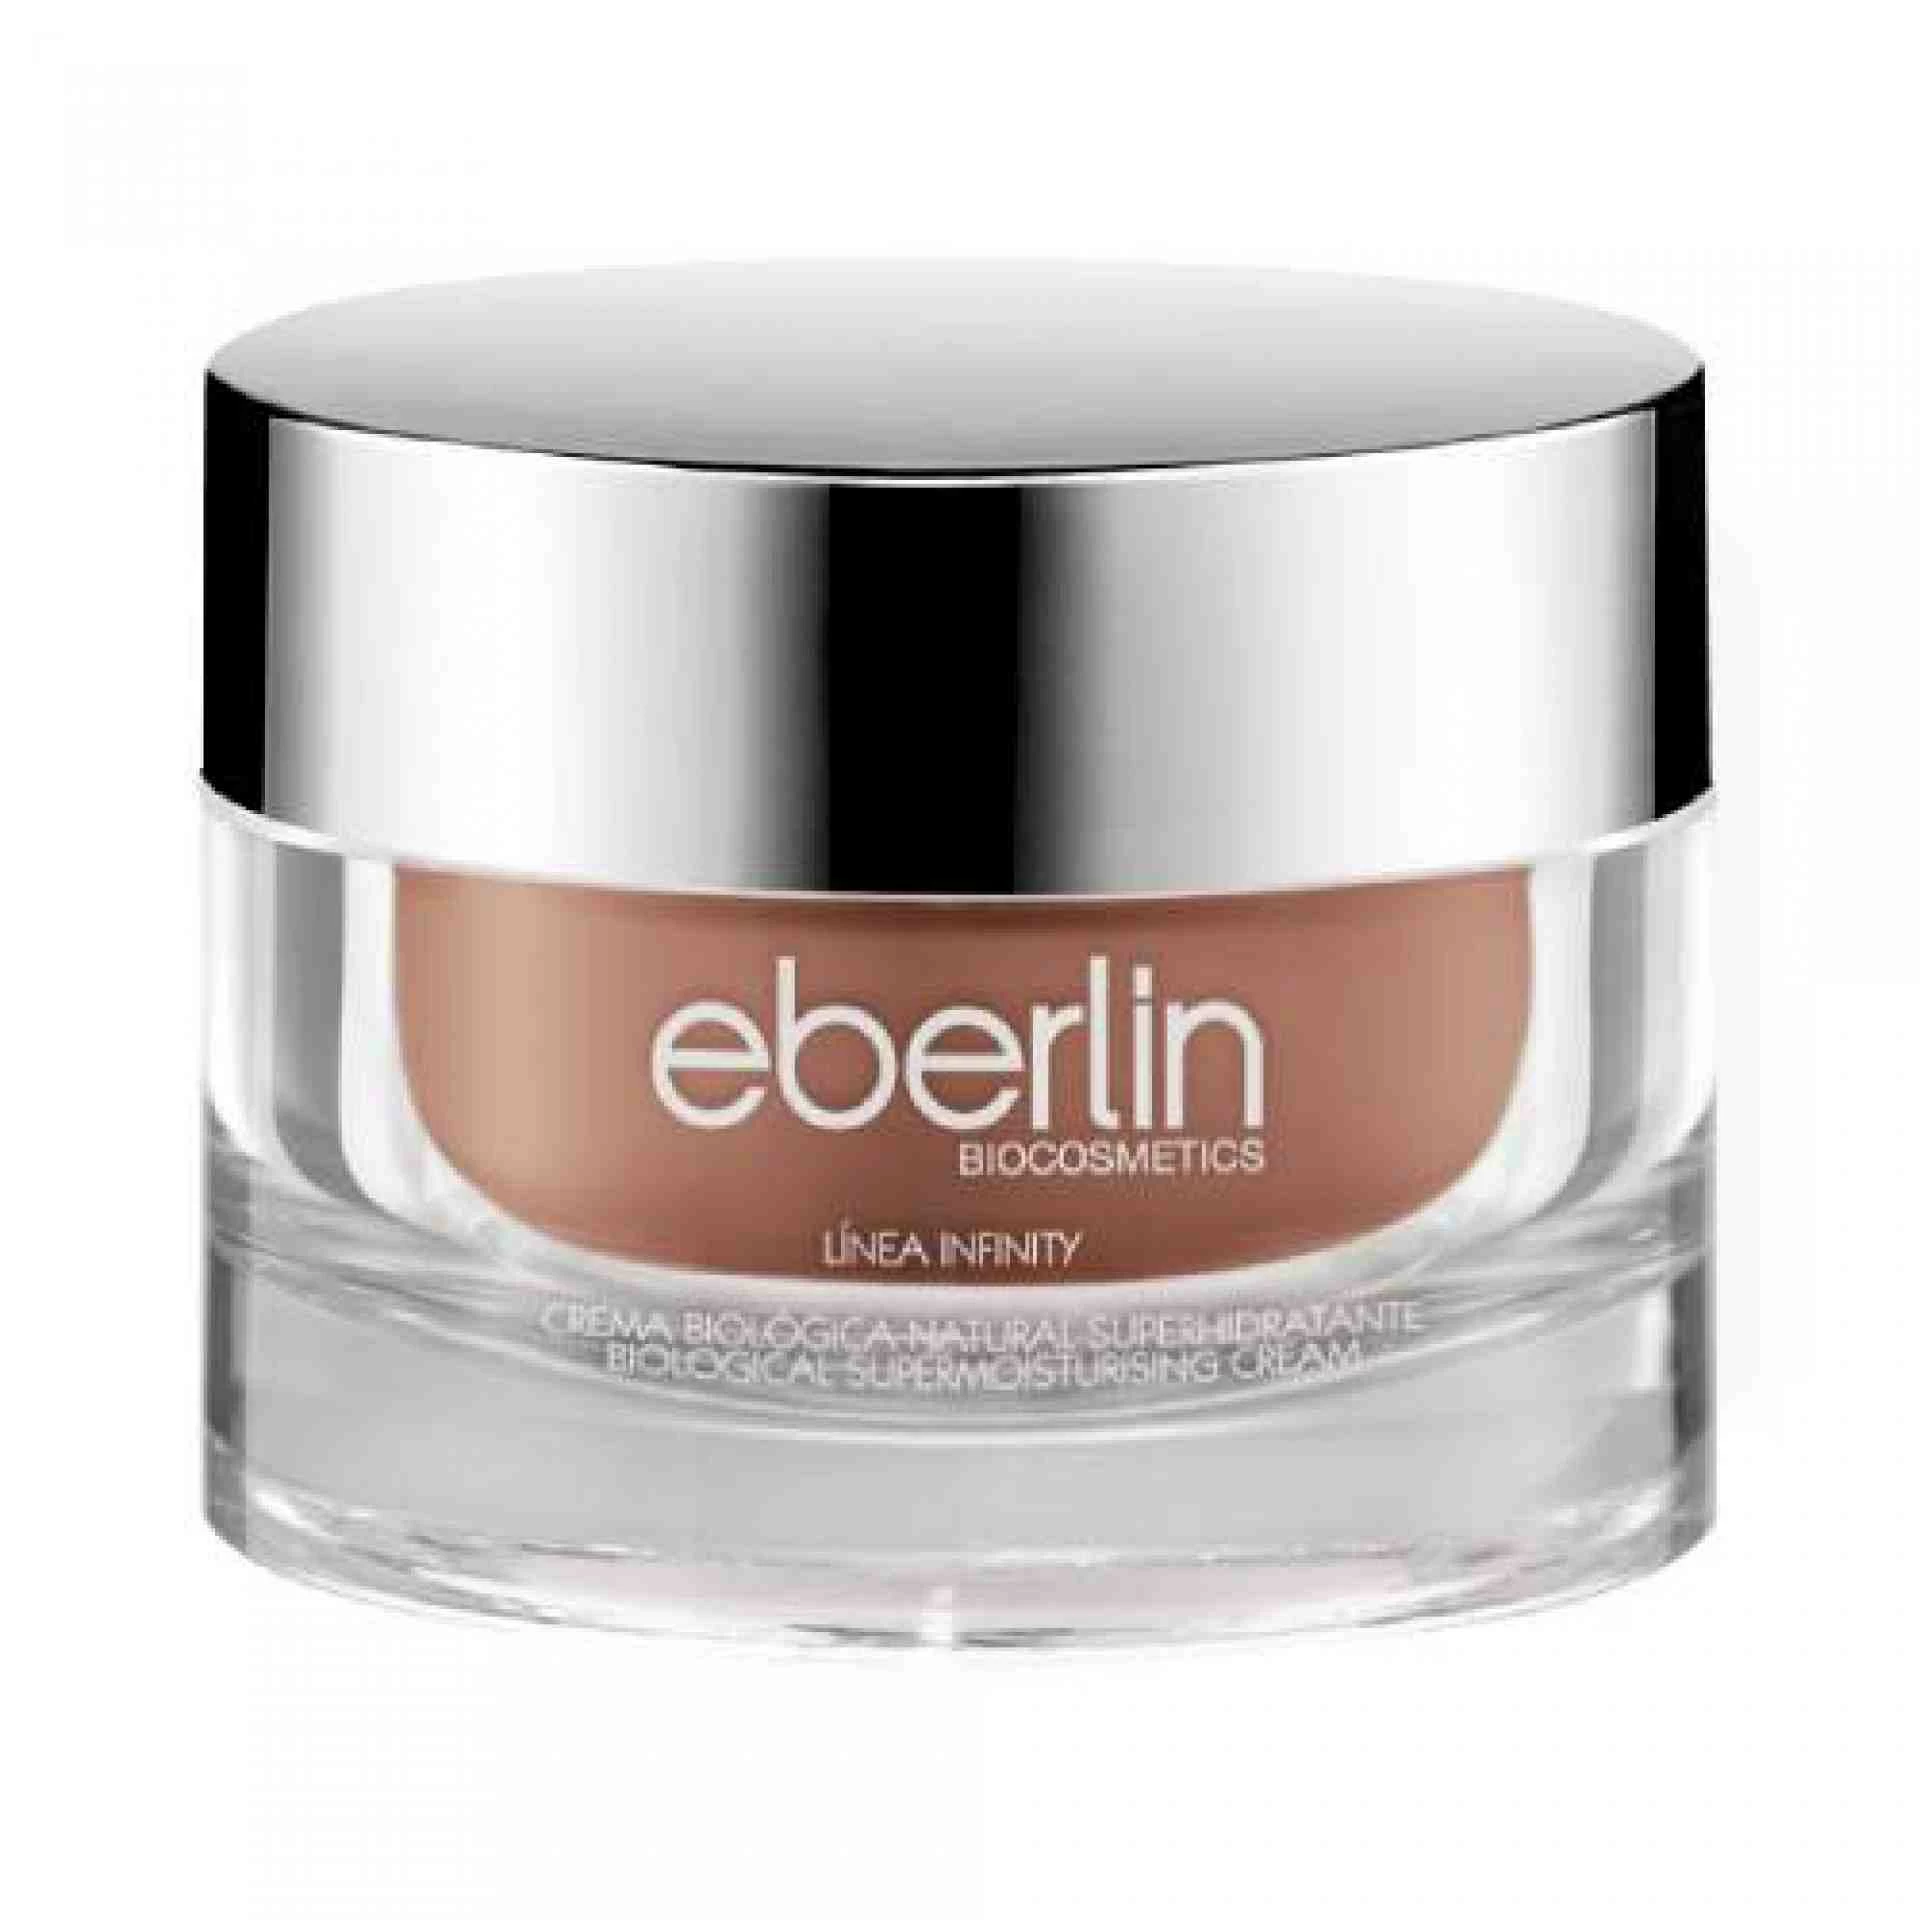 Crema biológica natural superhidratante 50ml | Línea Infinity - Eberlin ®